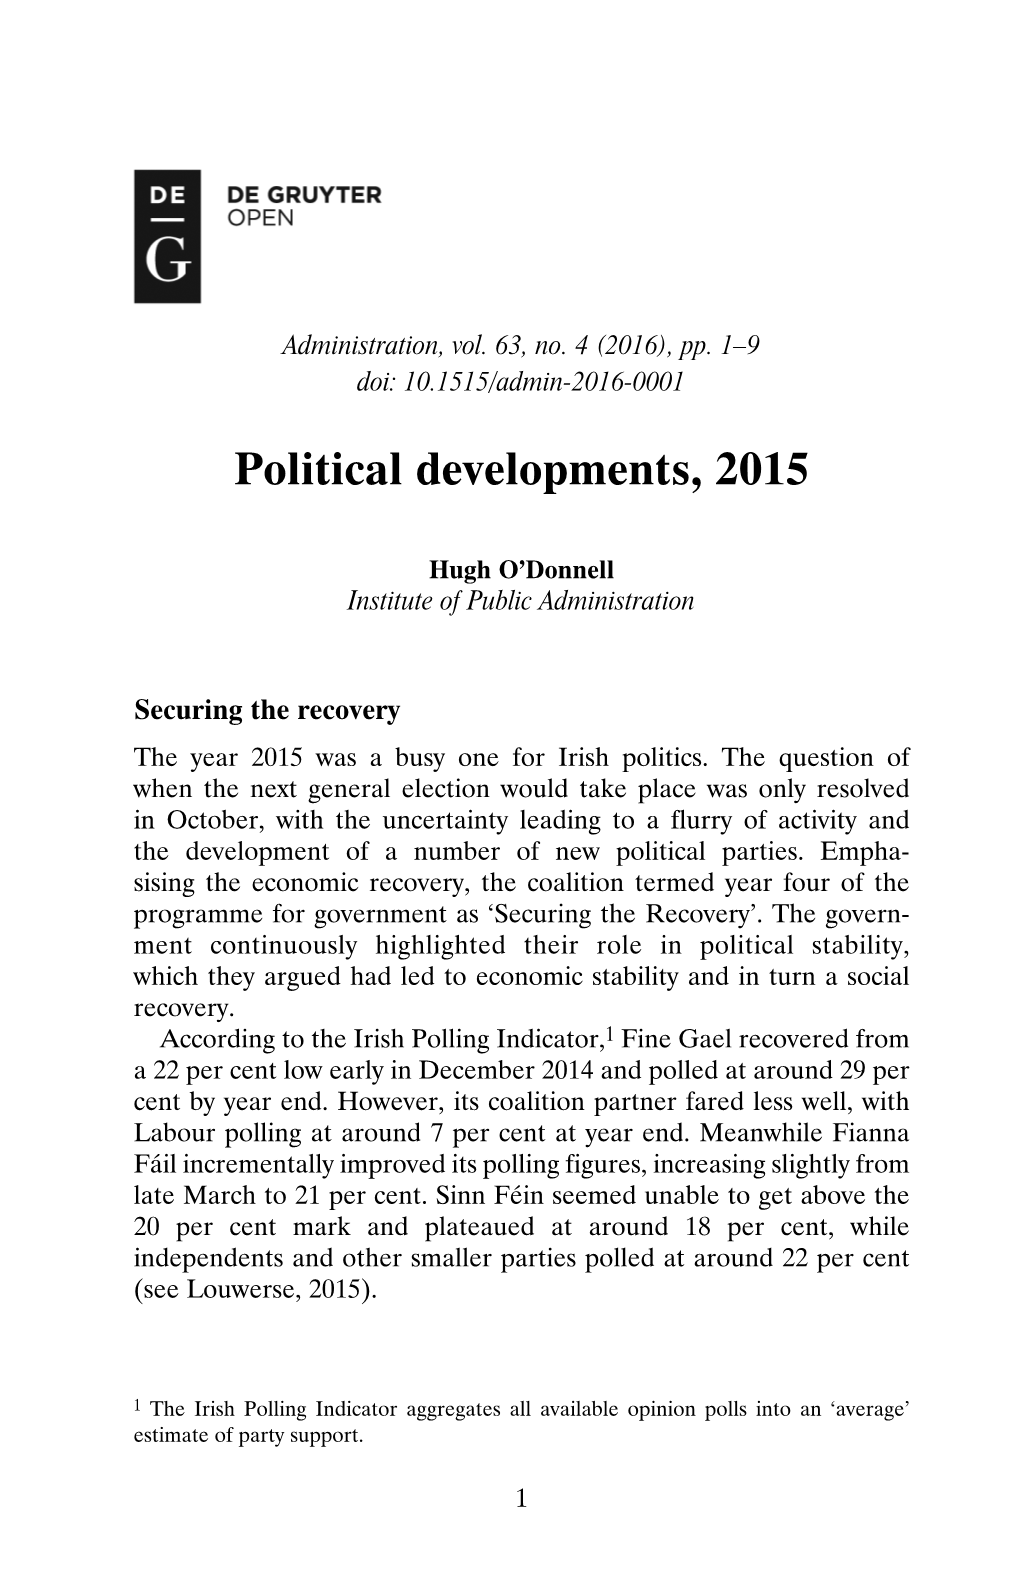 Political Developments, 2015